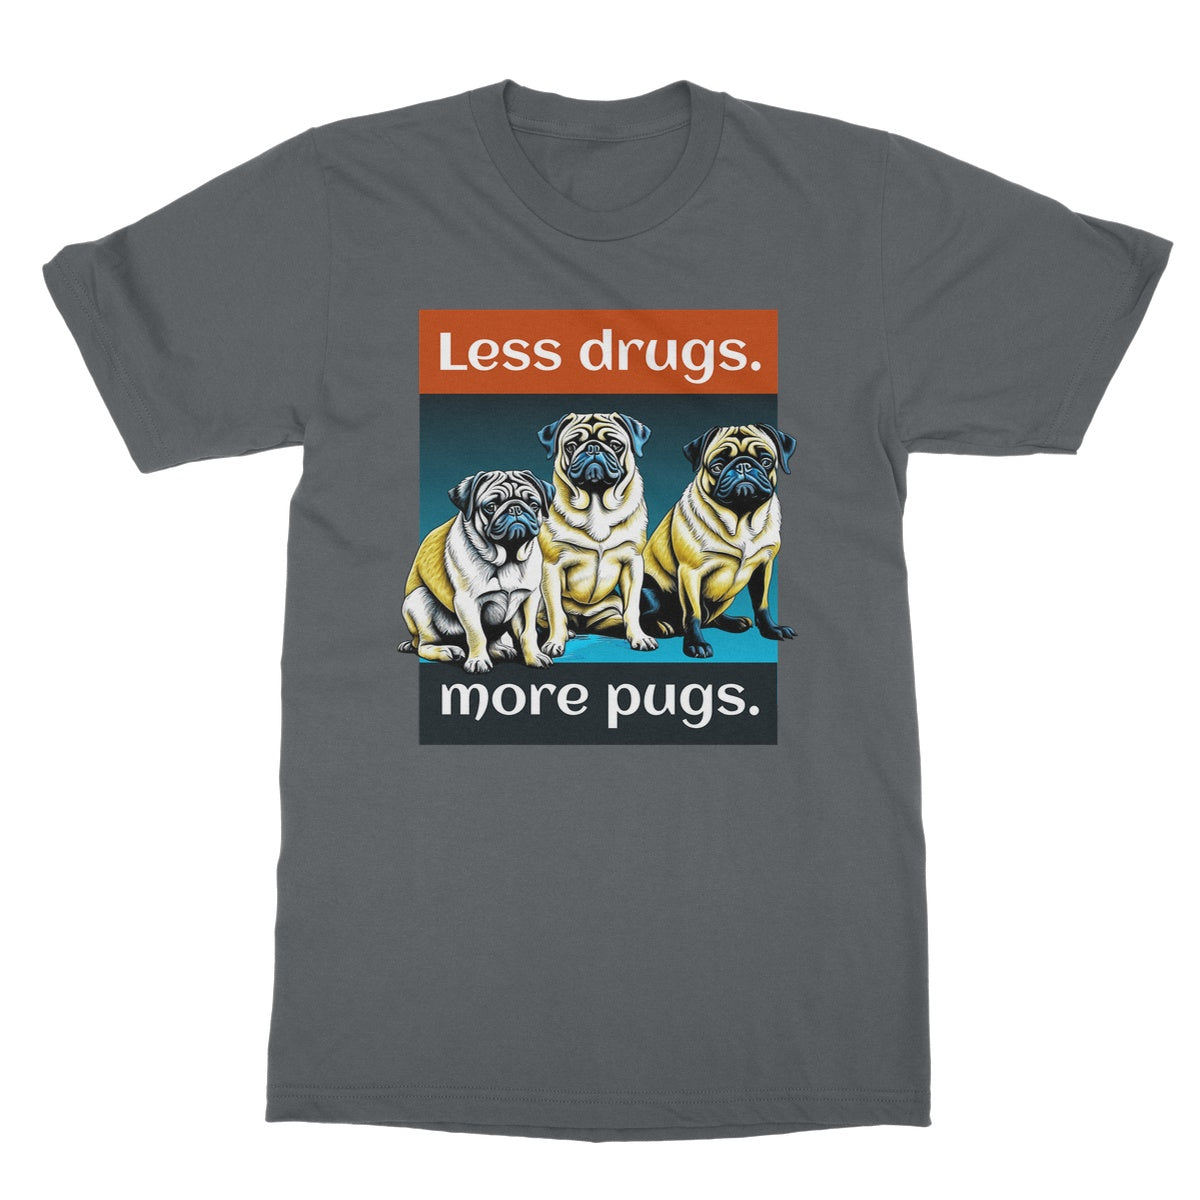 less drugs more pugs t shirt grey